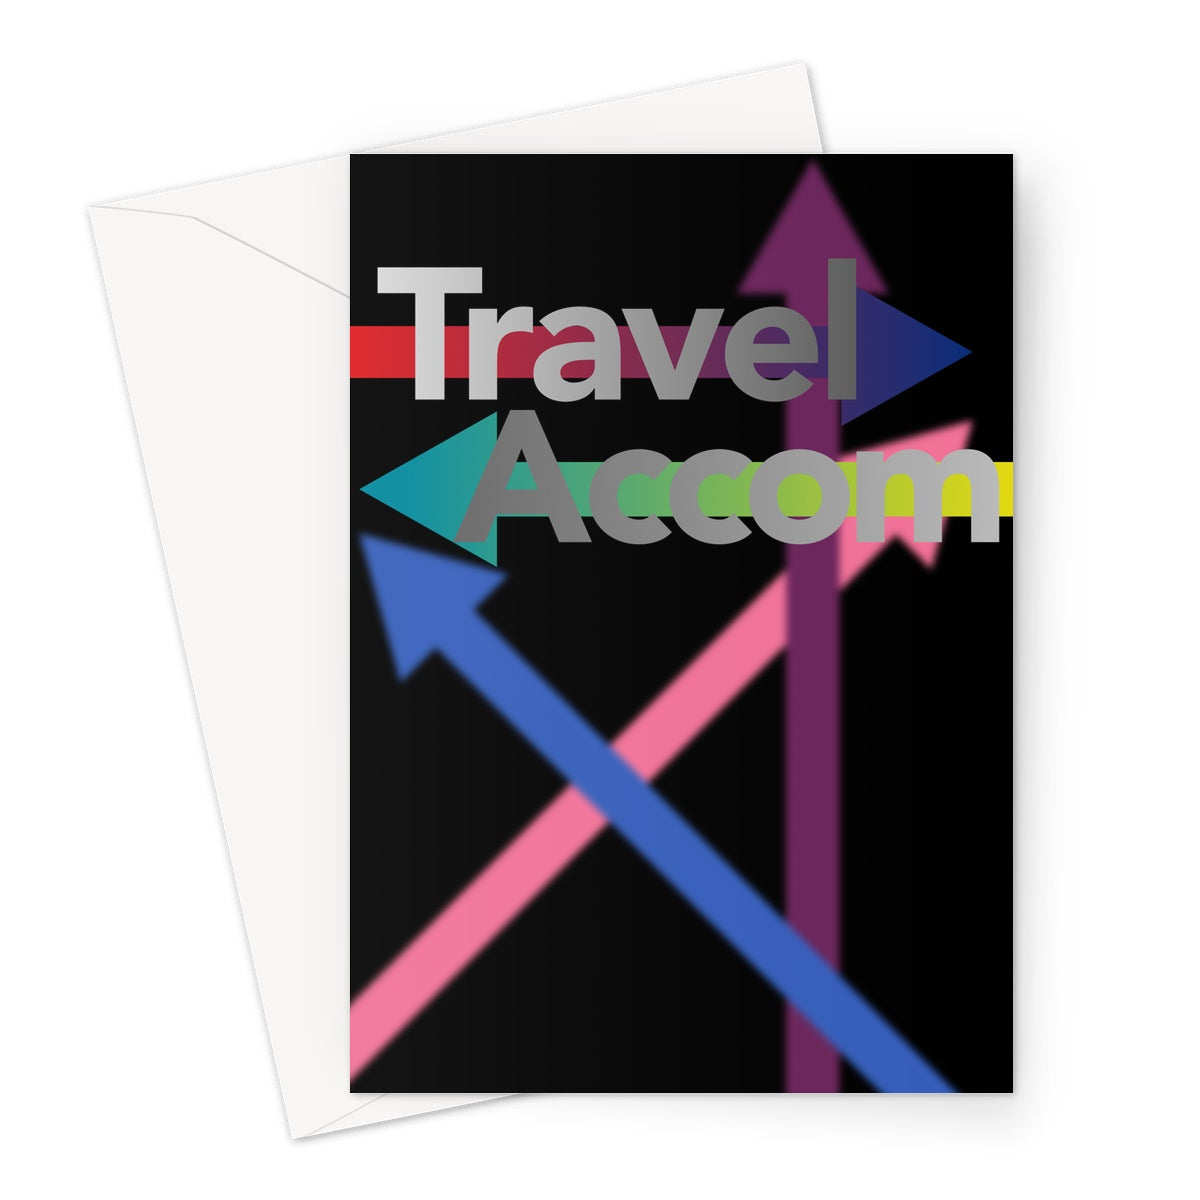 Travel/Accom Greeting Card